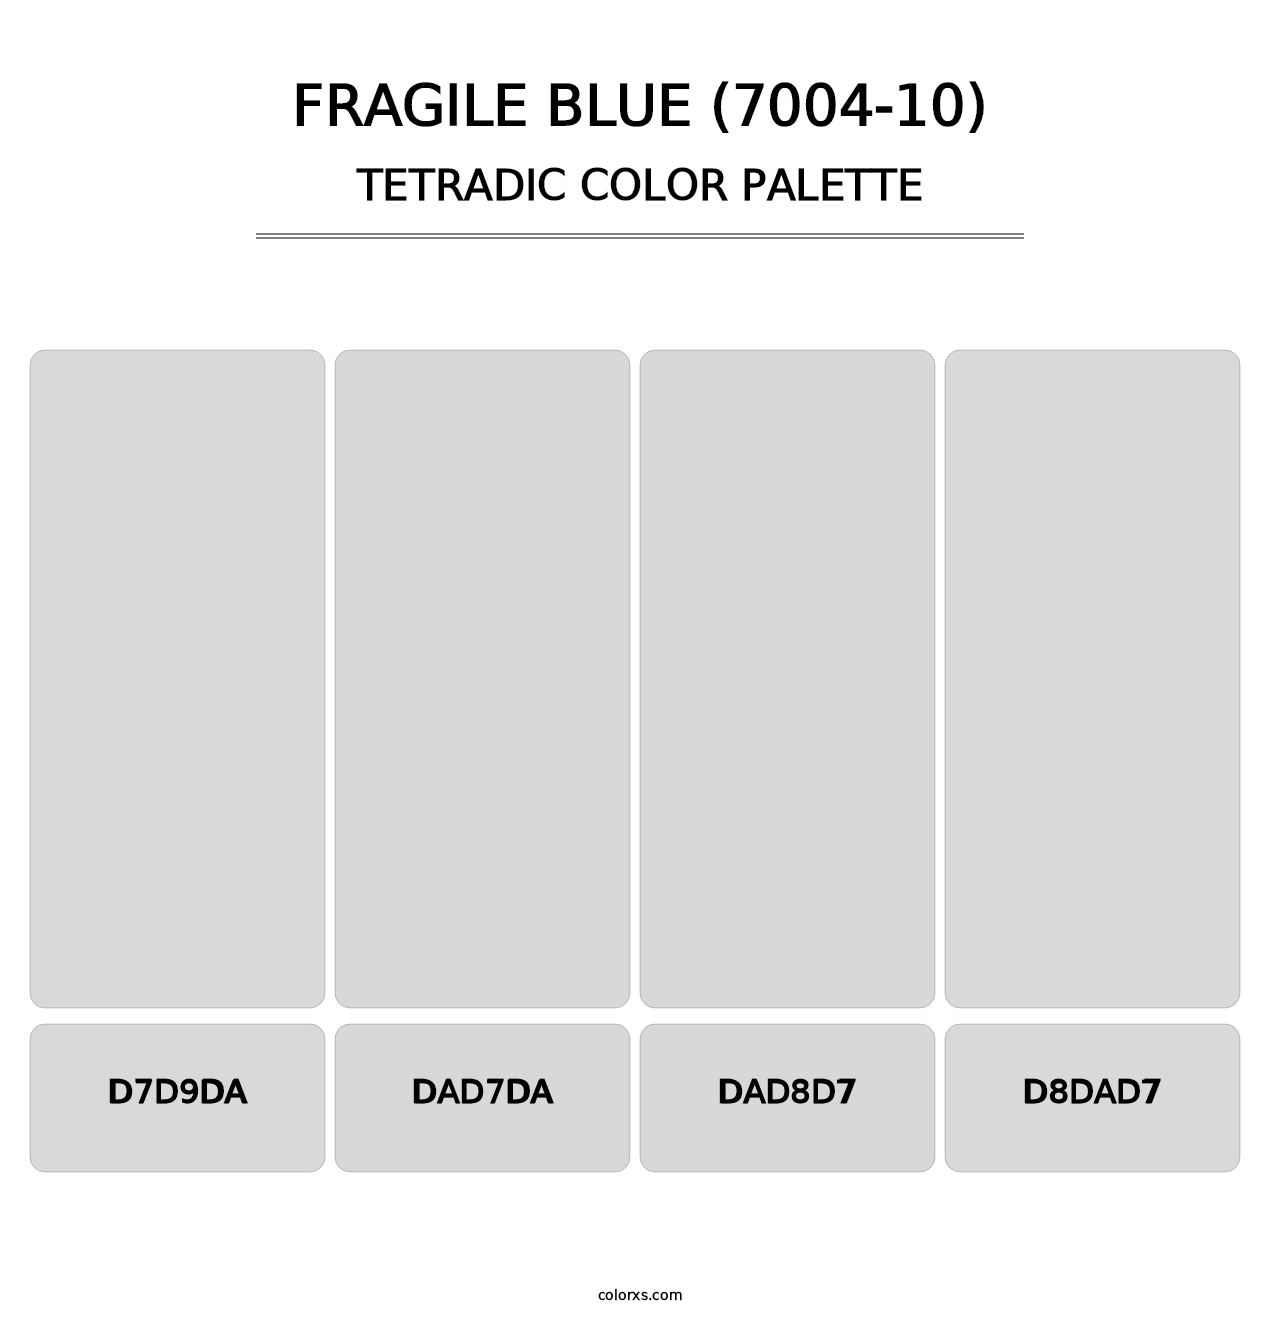 Fragile Blue (7004-10) - Tetradic Color Palette